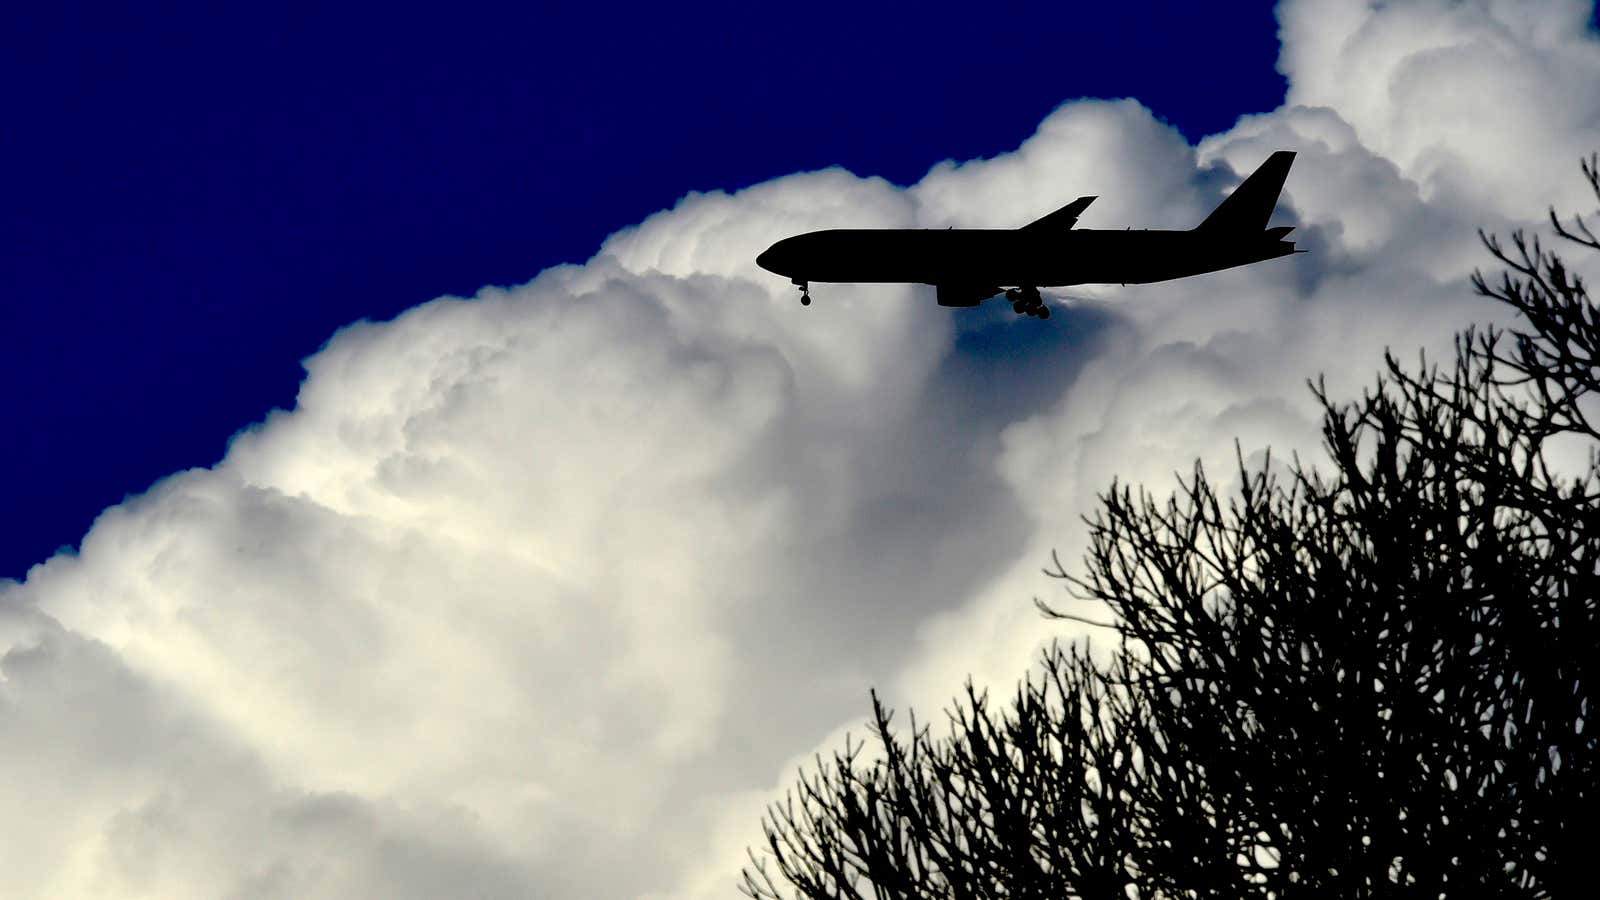 A passenger aircraft approaches London’s Heathrow Airport.